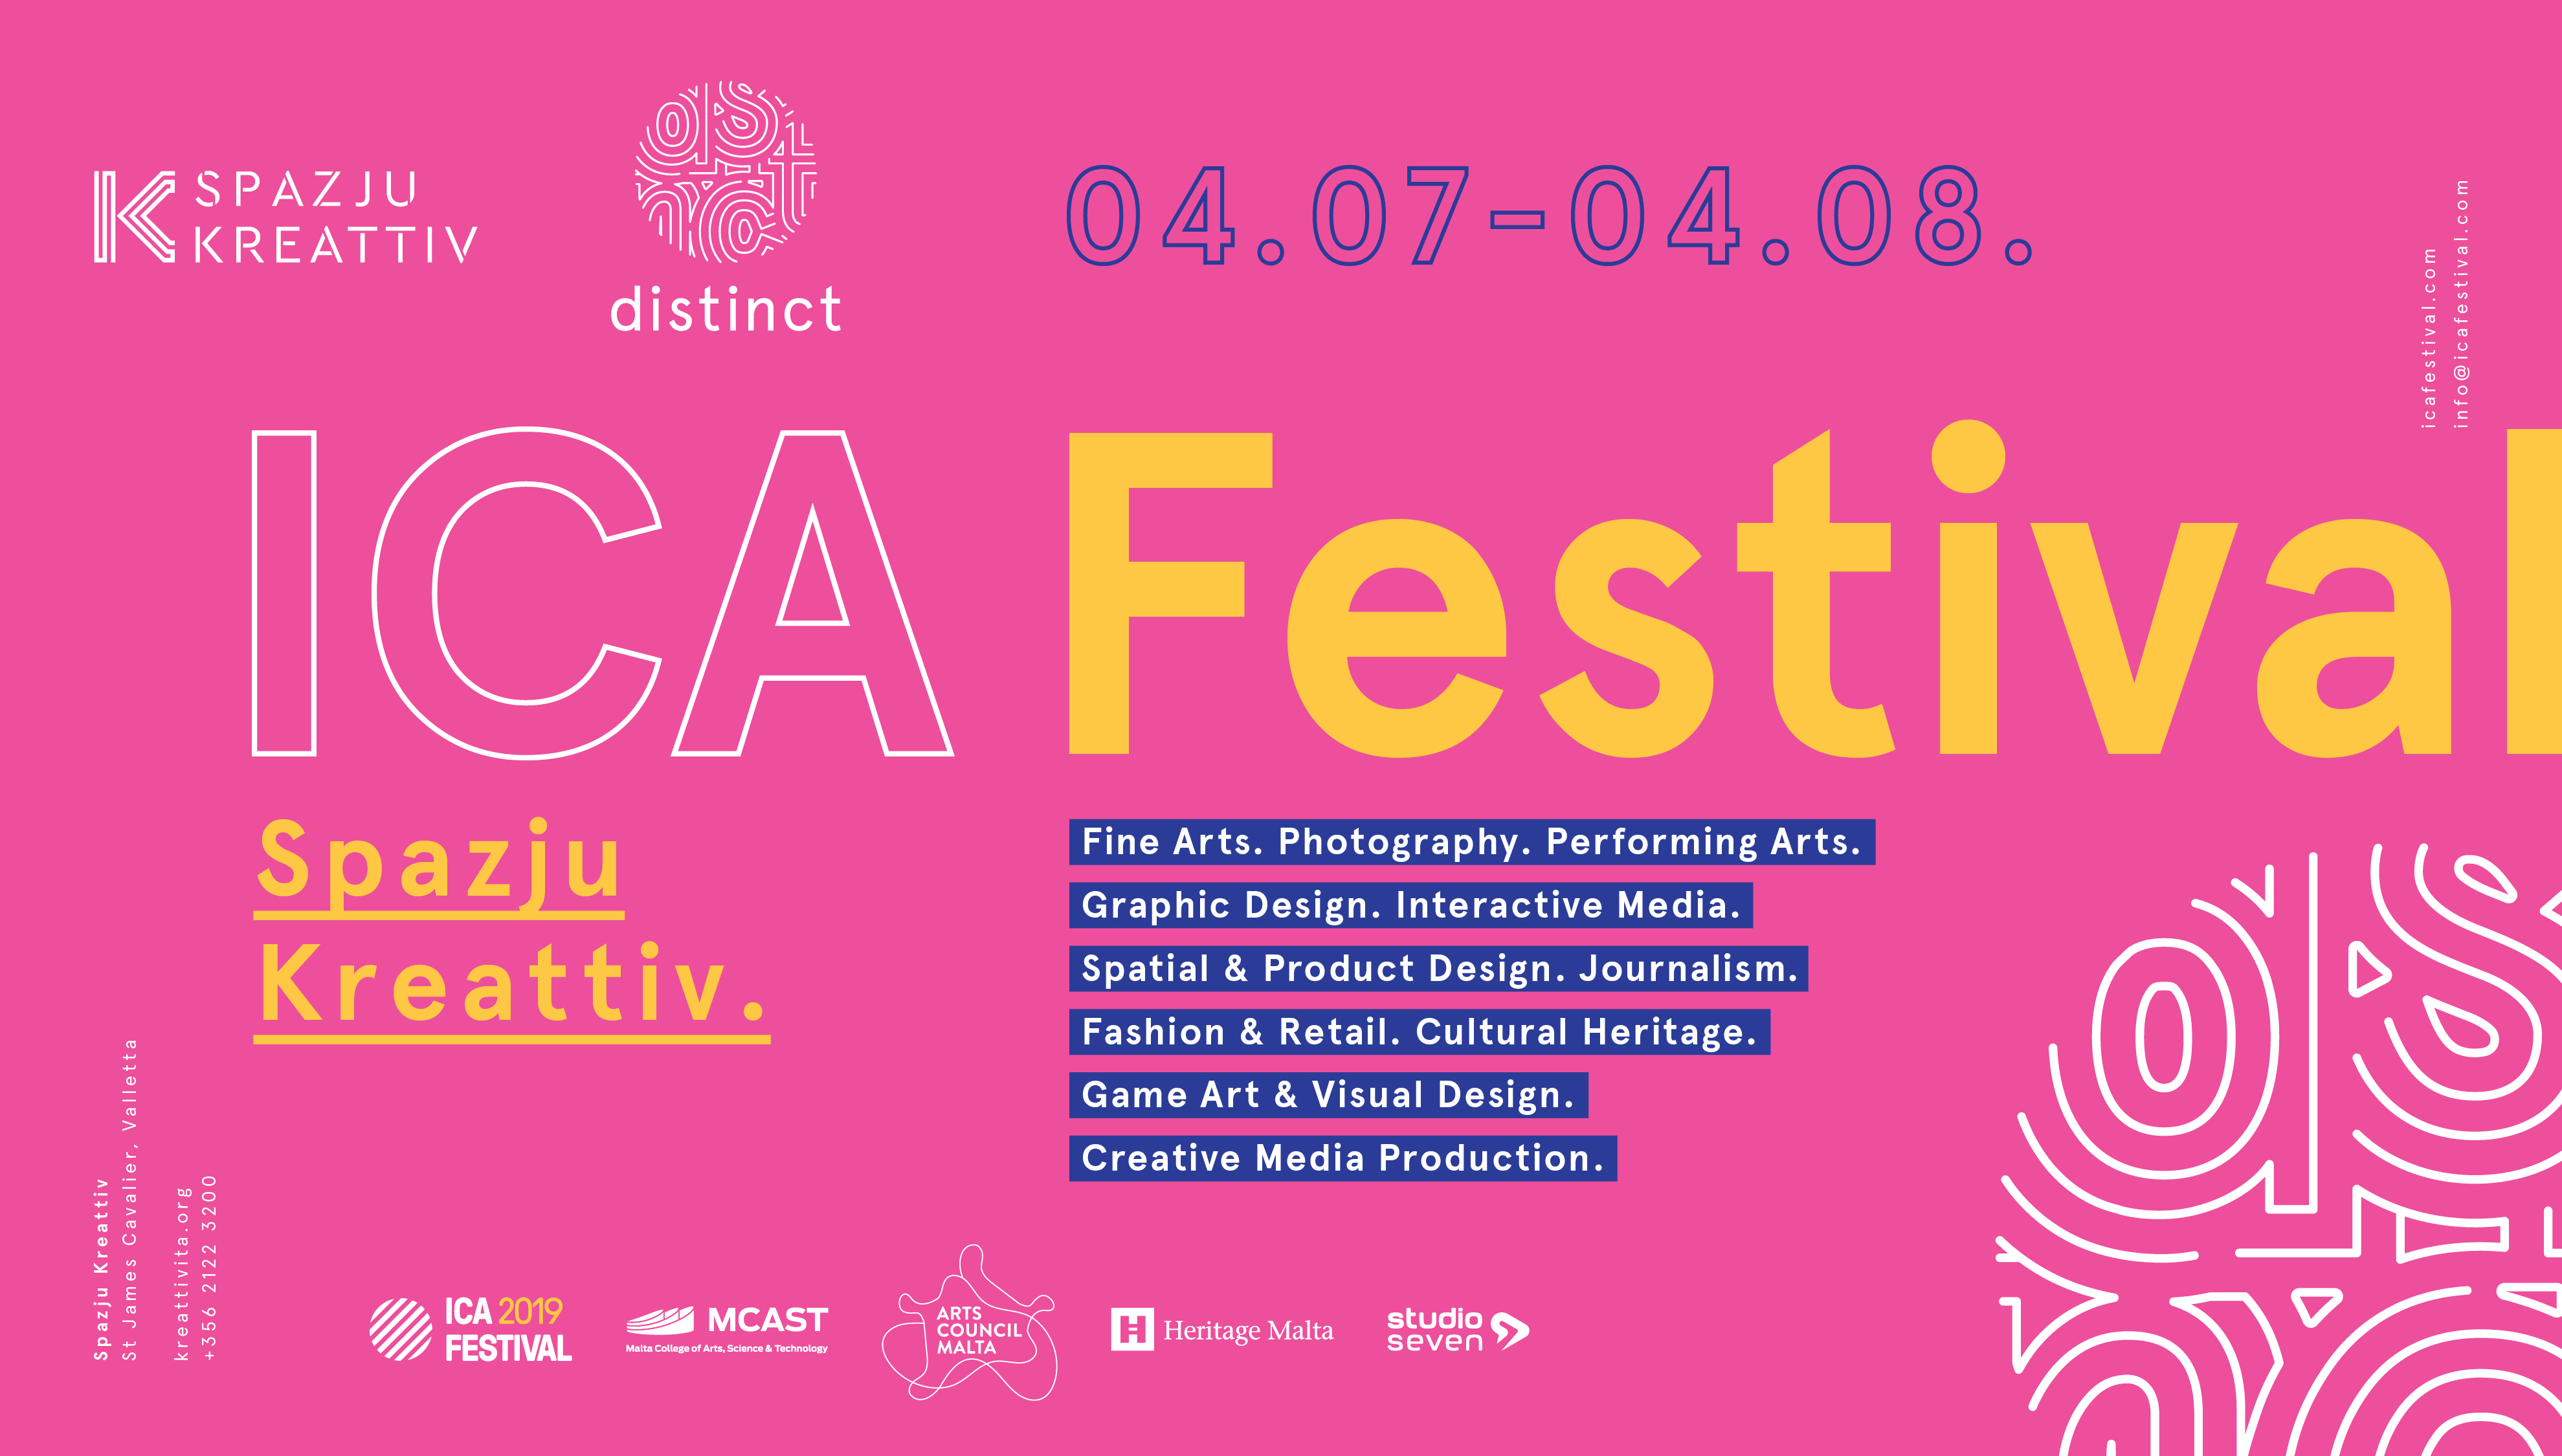 ICA Festival Generic Poster